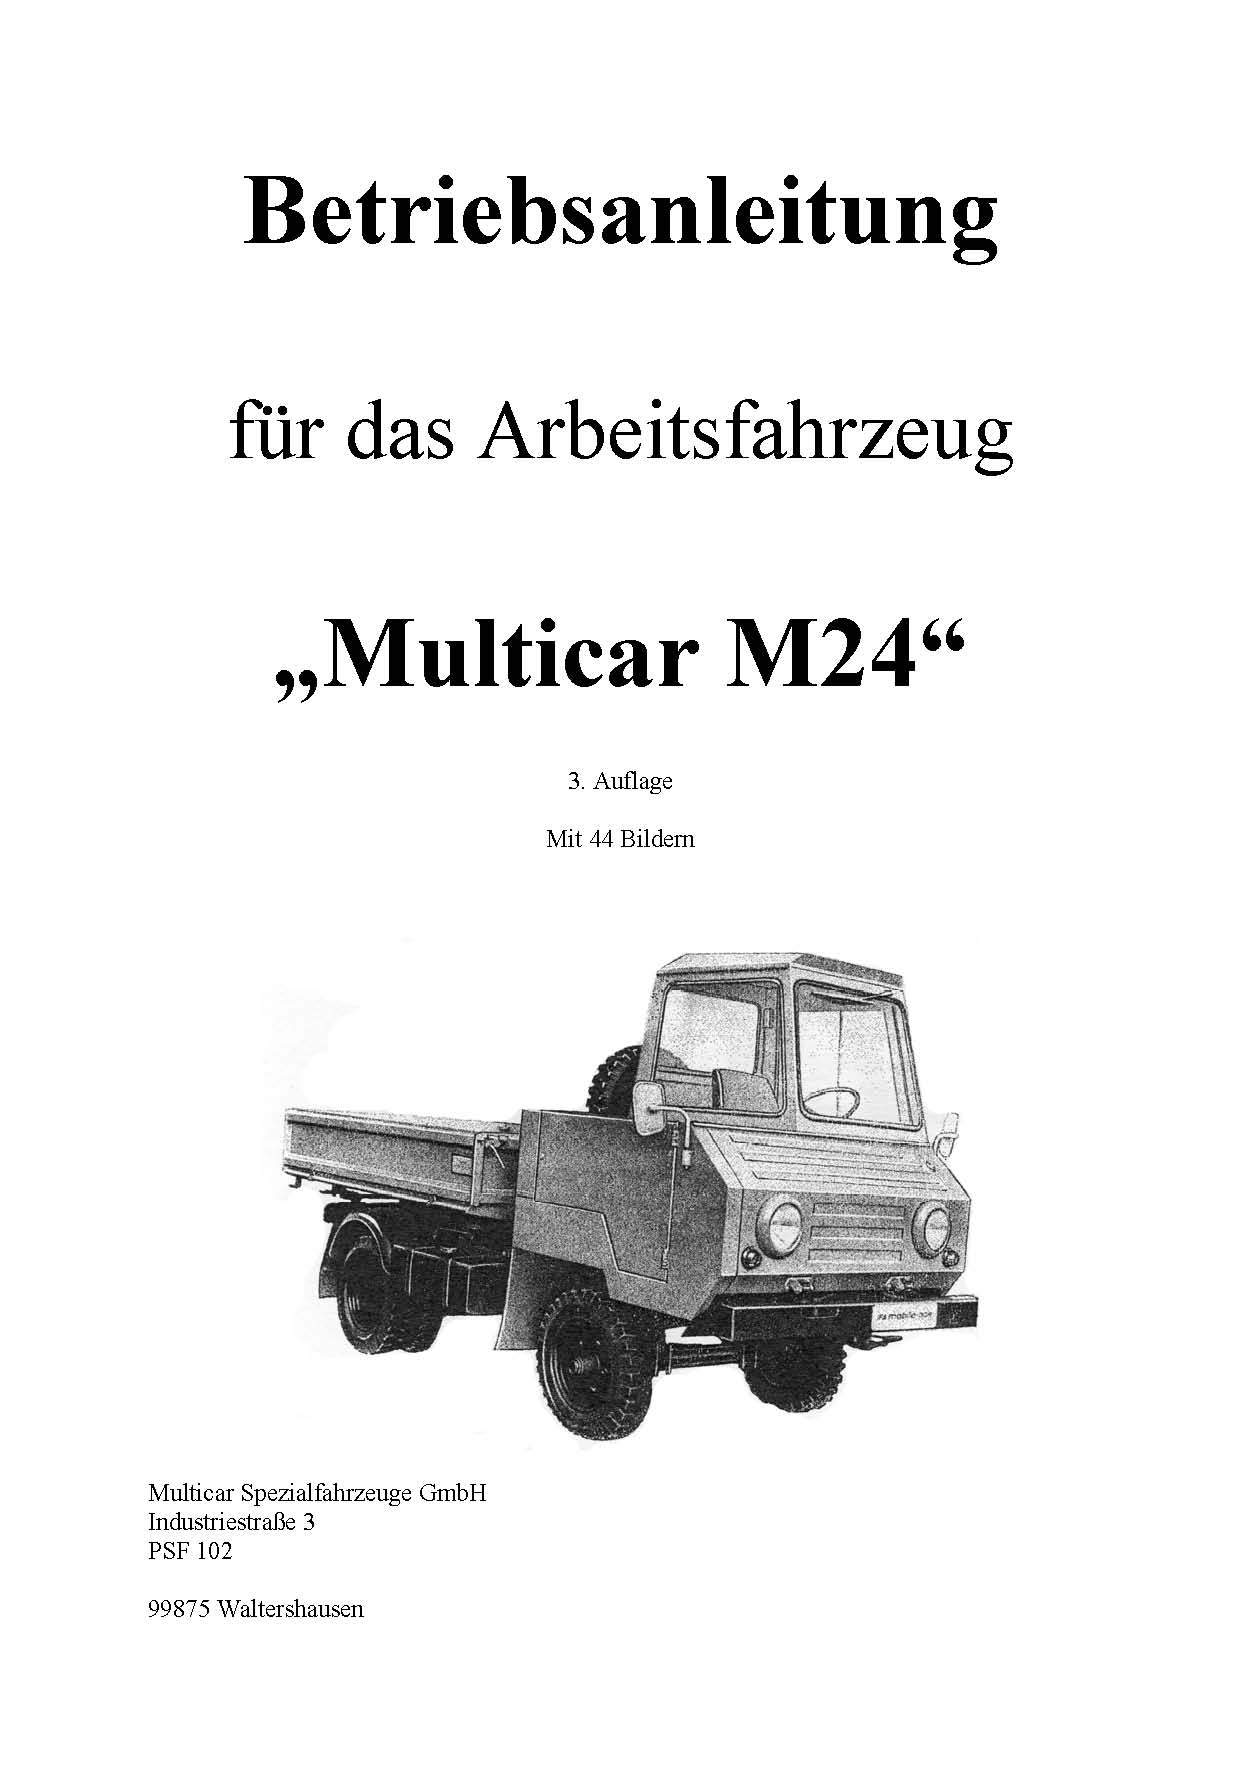 Multicar 24